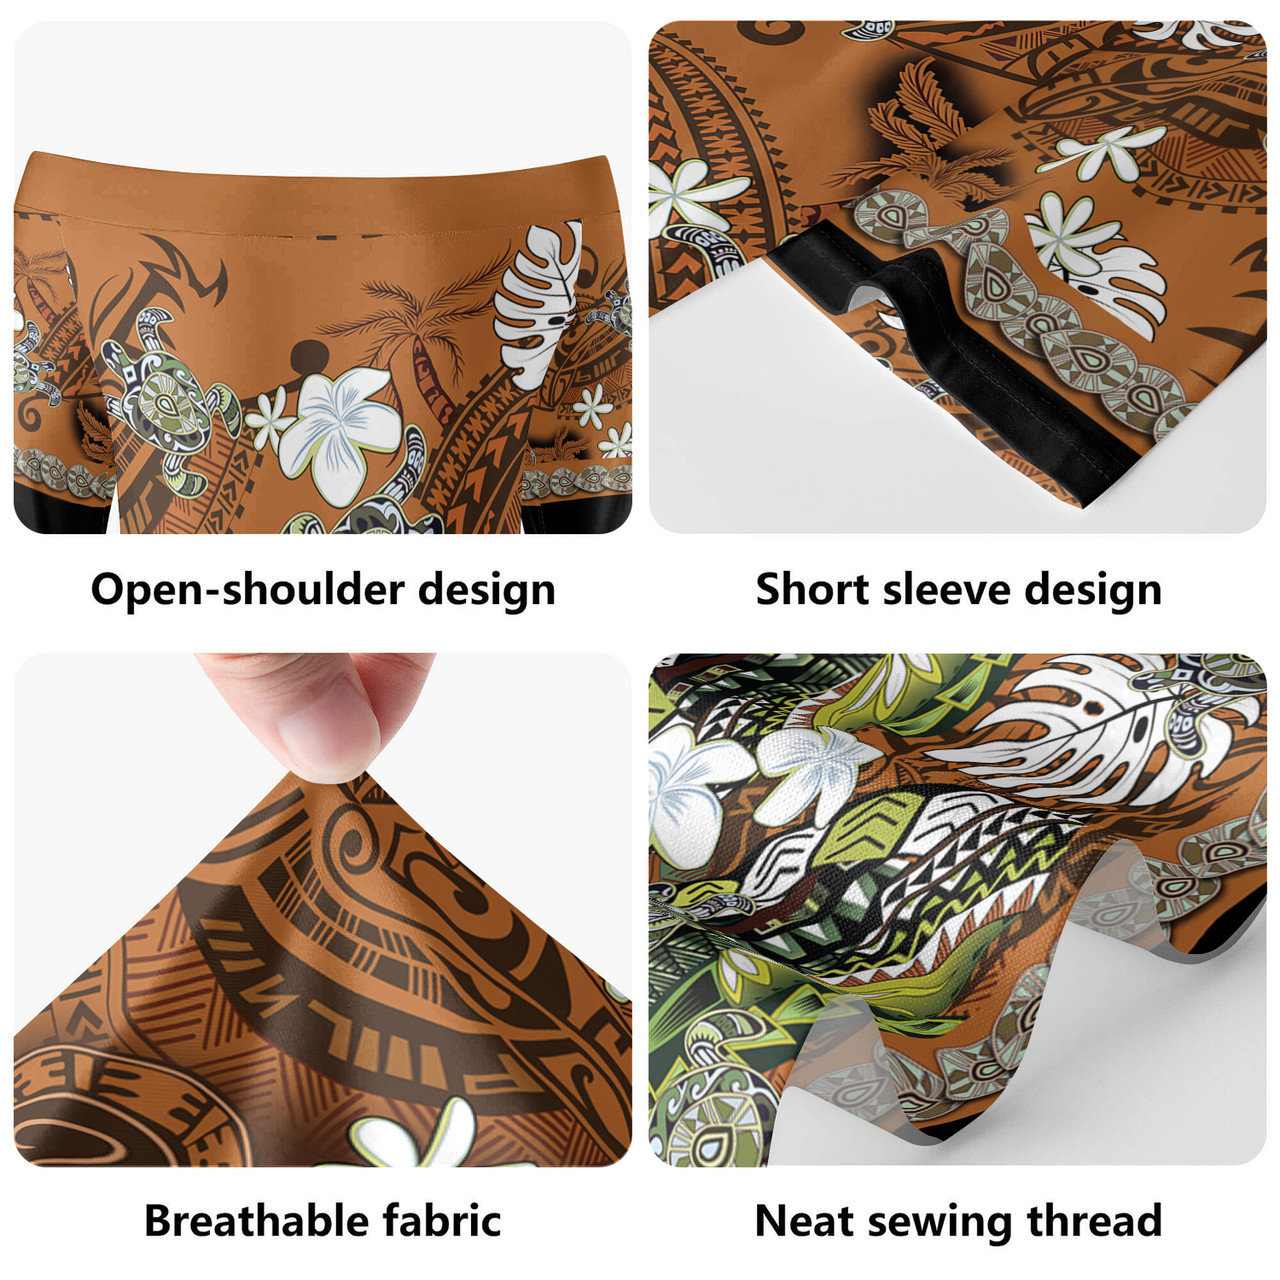 Hawaii Combo Short Sleeve Dress And Shirt Polynesia Floral And Tribal Islands